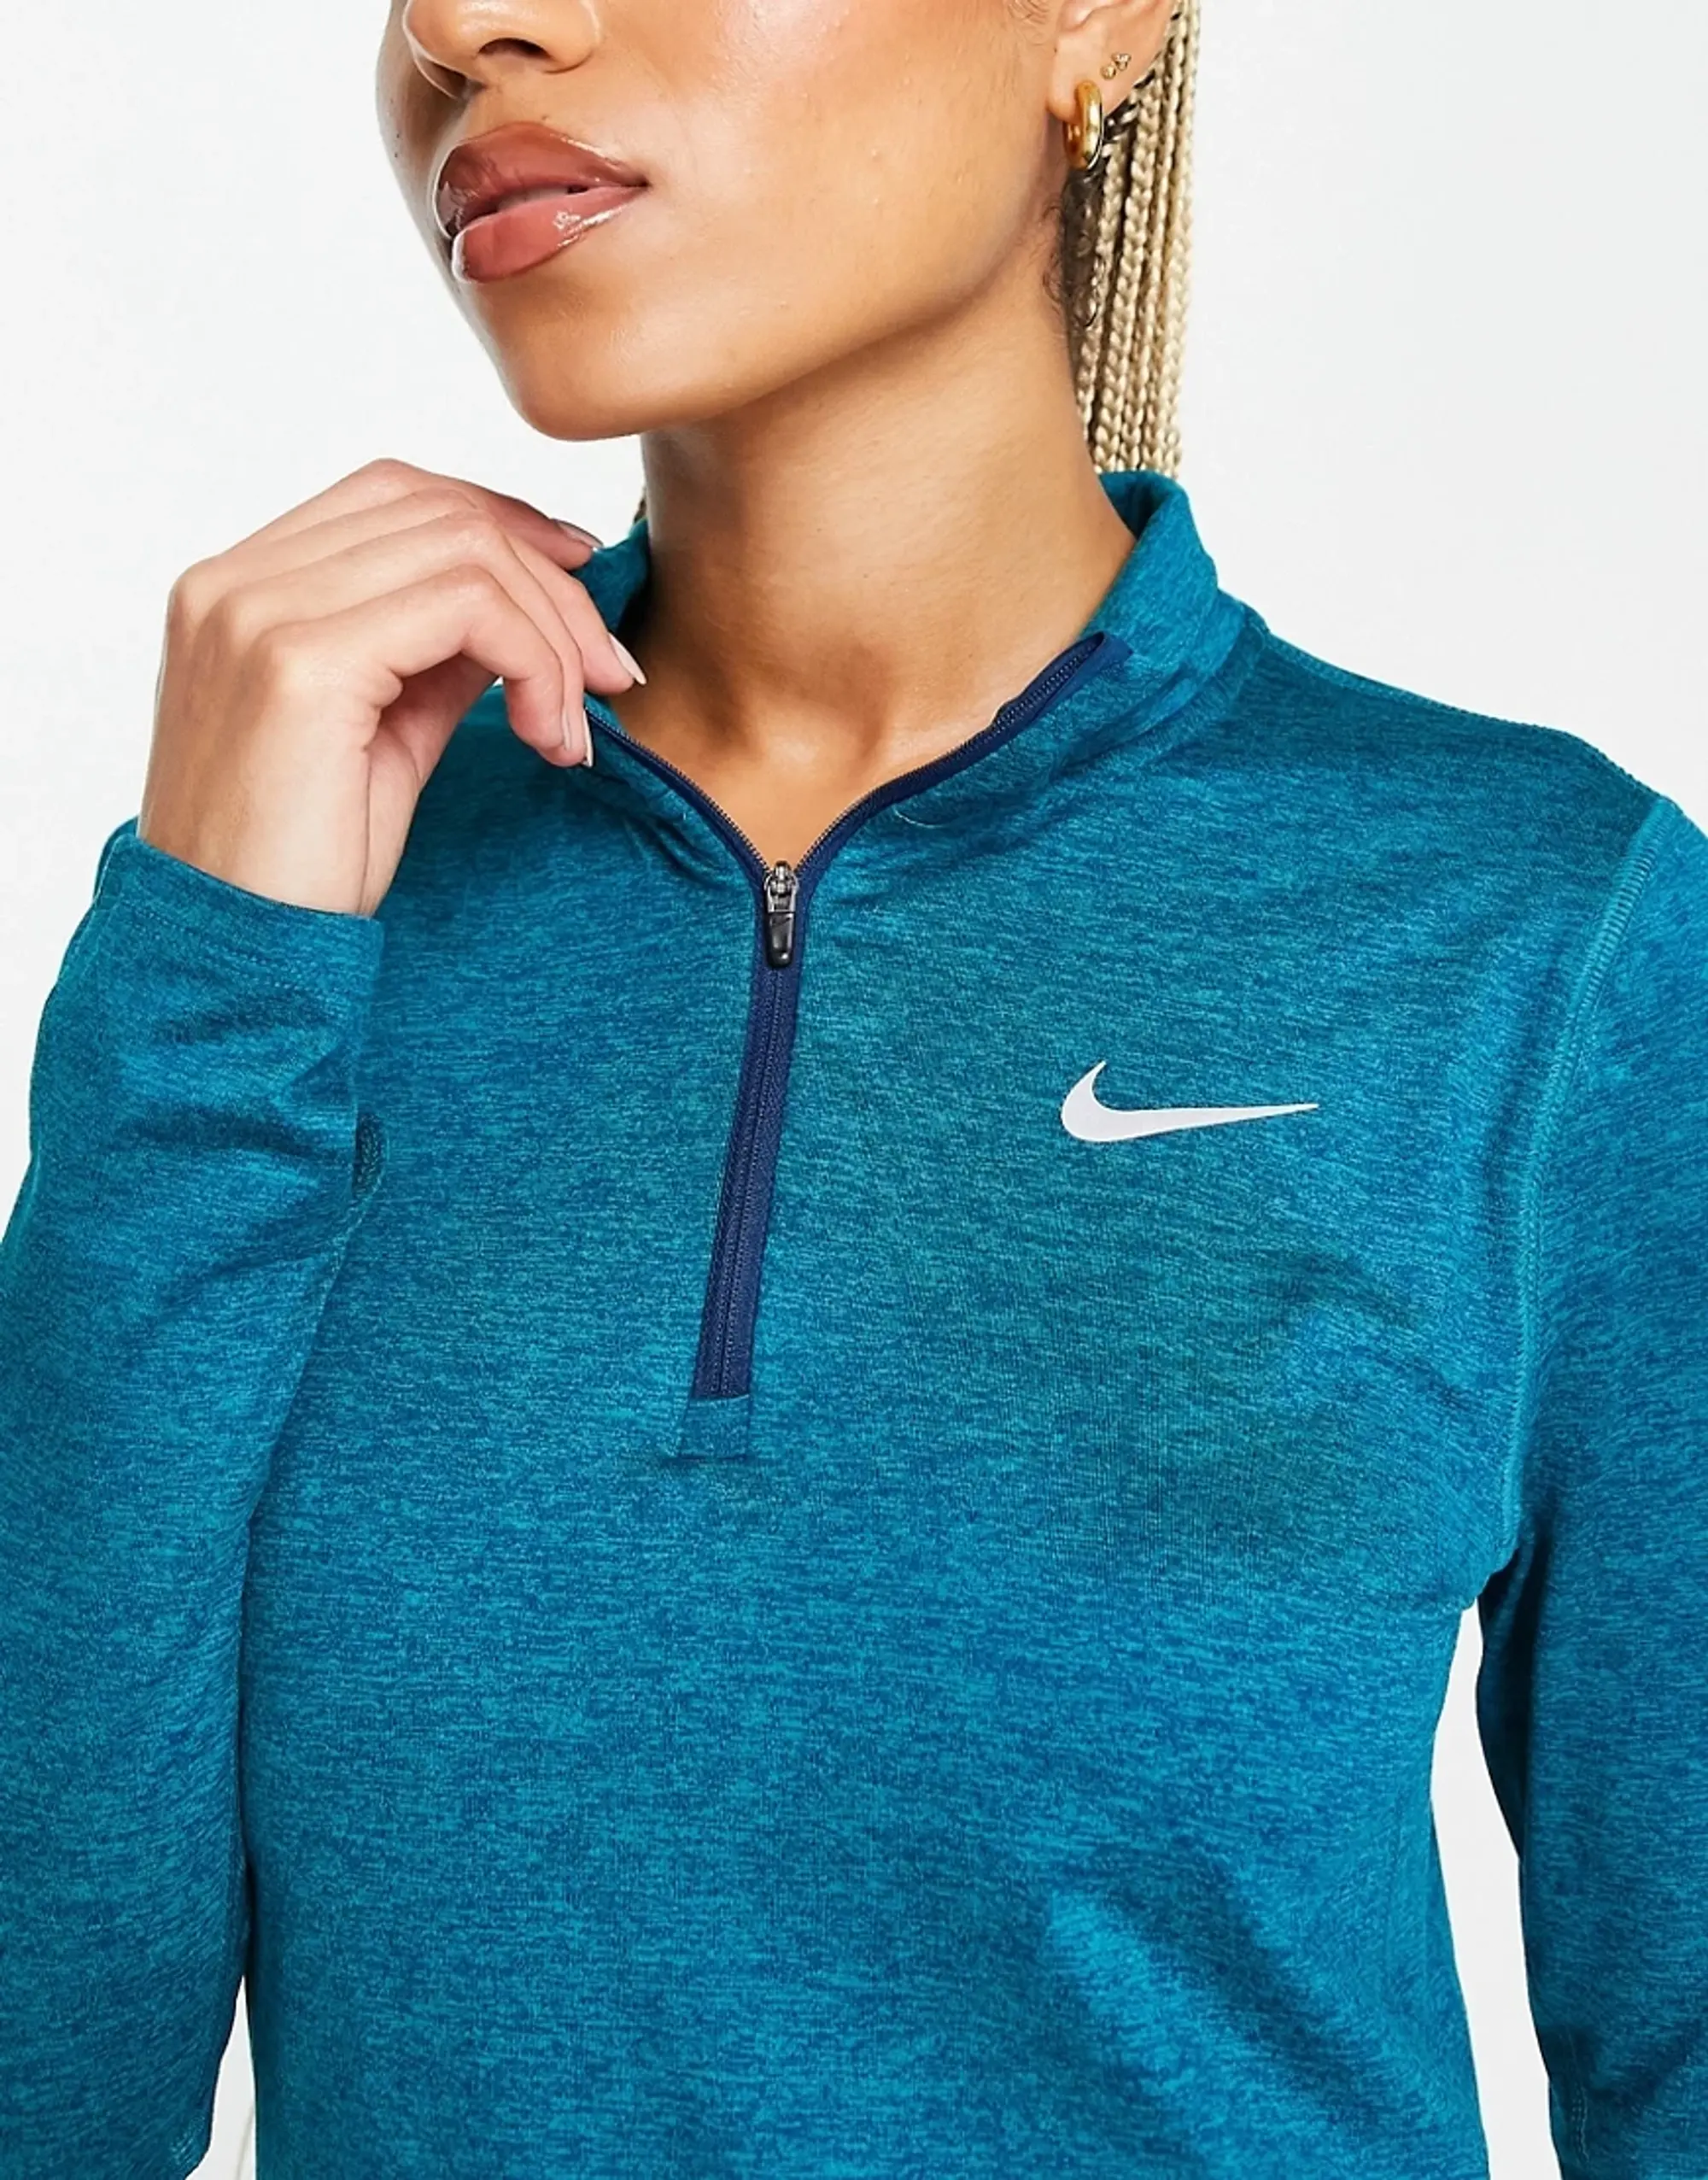 Nike Womens Element Half Zip Running T-Shirt - Valerian Blue / Bright Spruce / Heather